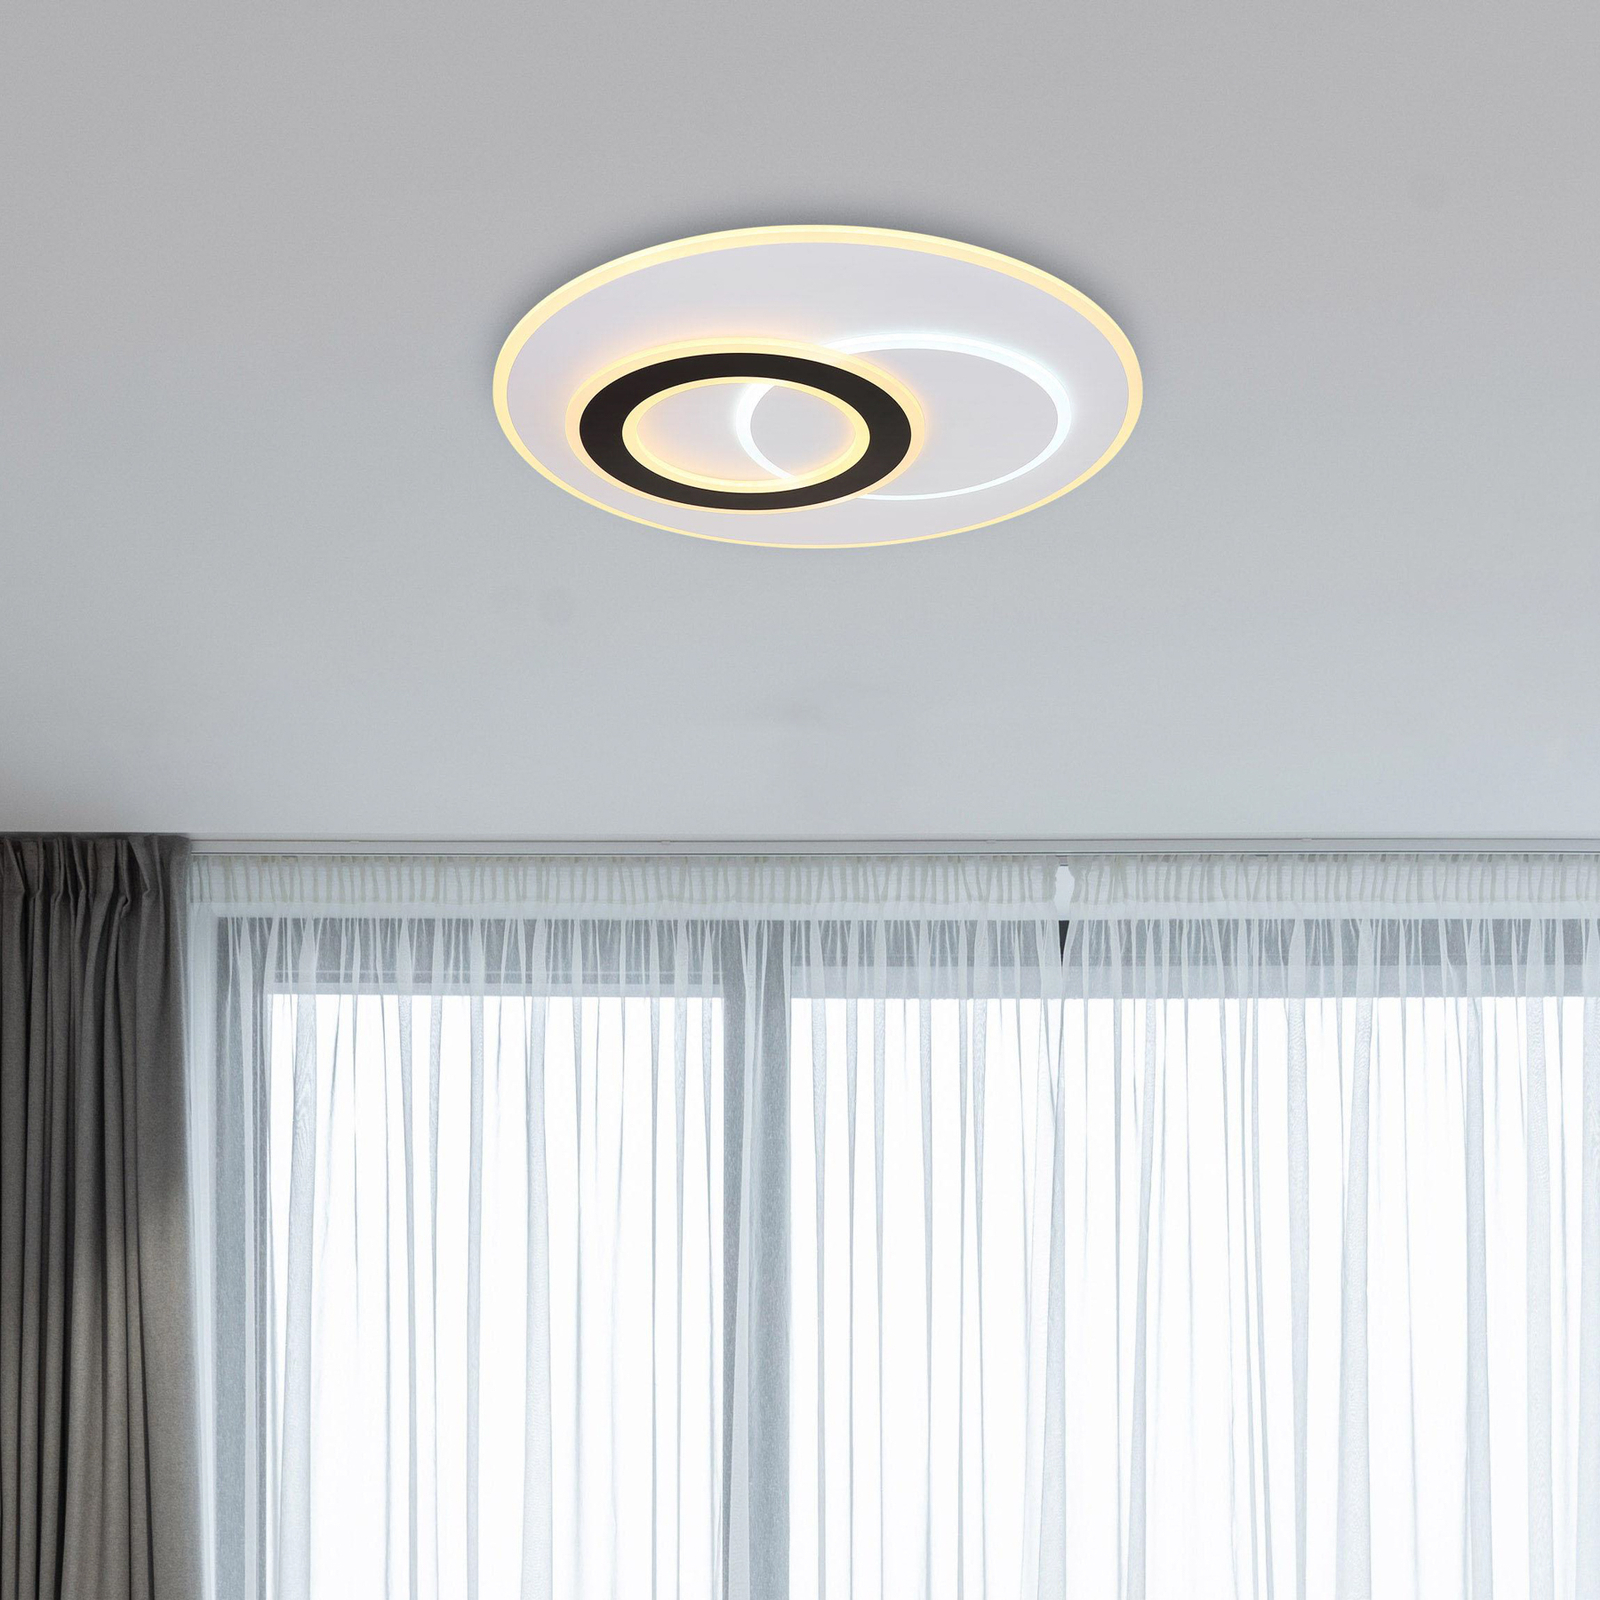 Jacques smart LED ceiling light, white/black, Ø 70 cm, CCT